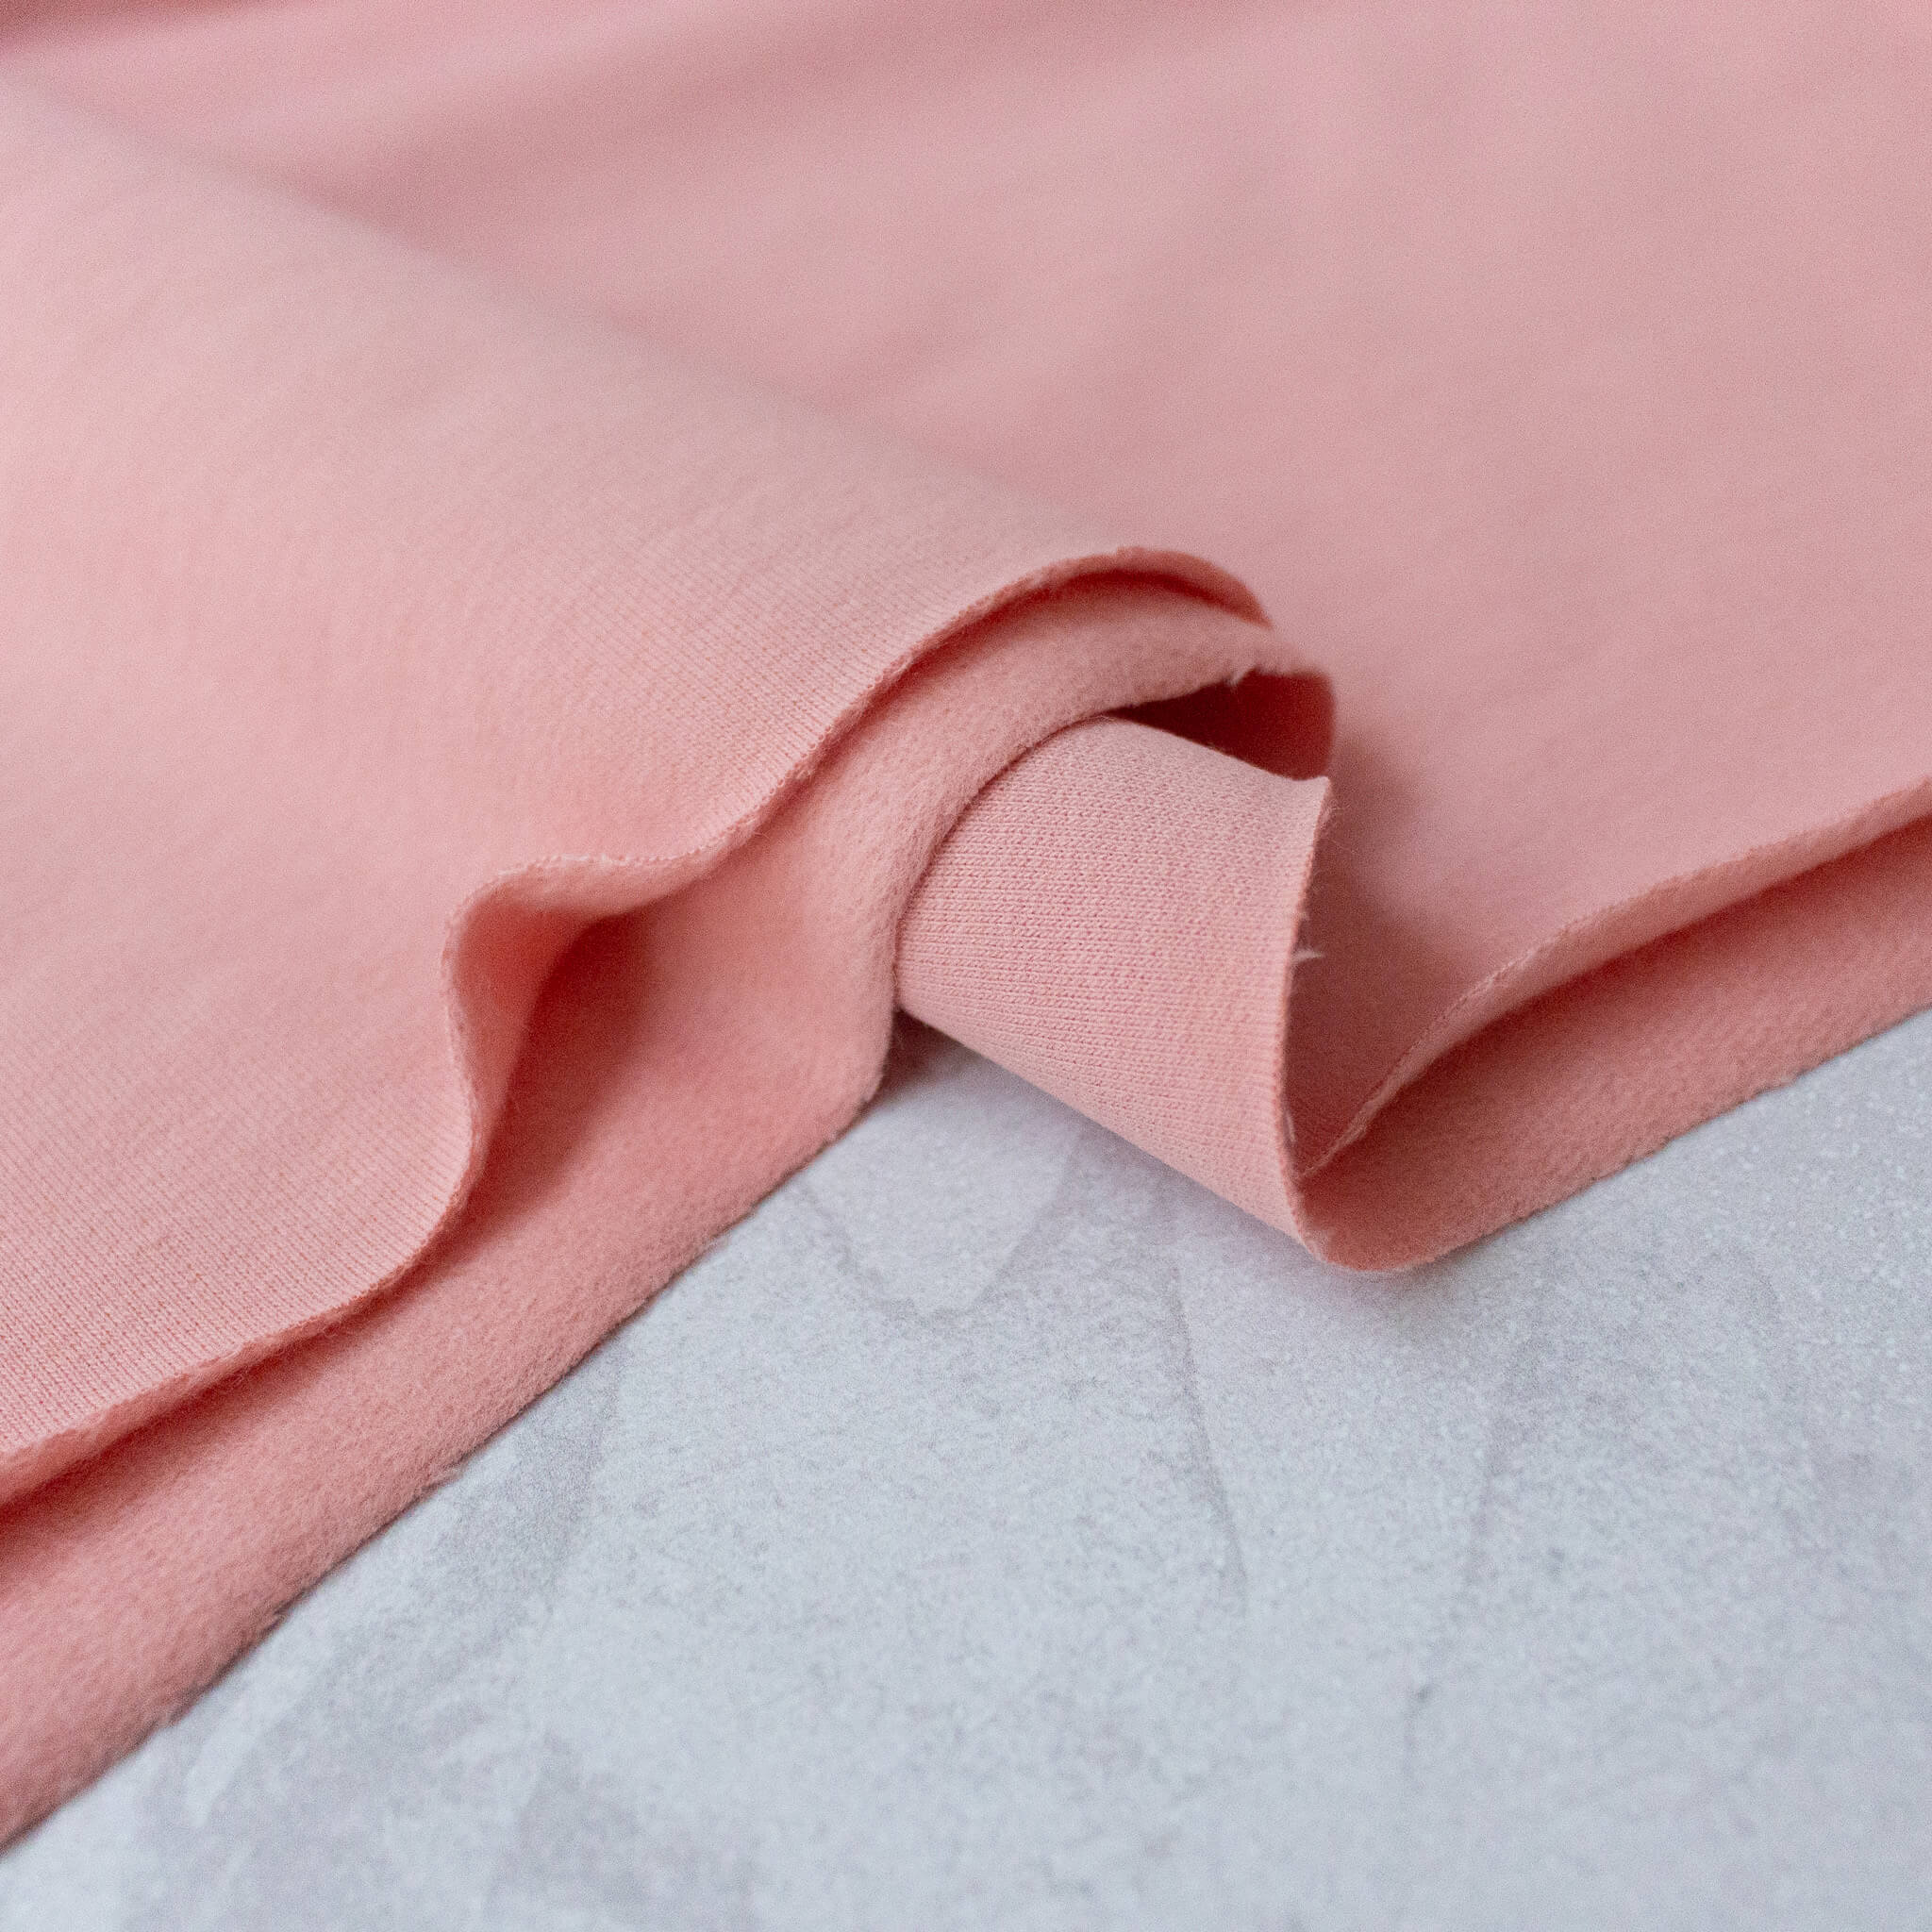 Organic Cotton Tubular Ribbing Fabric in Peachy Pink